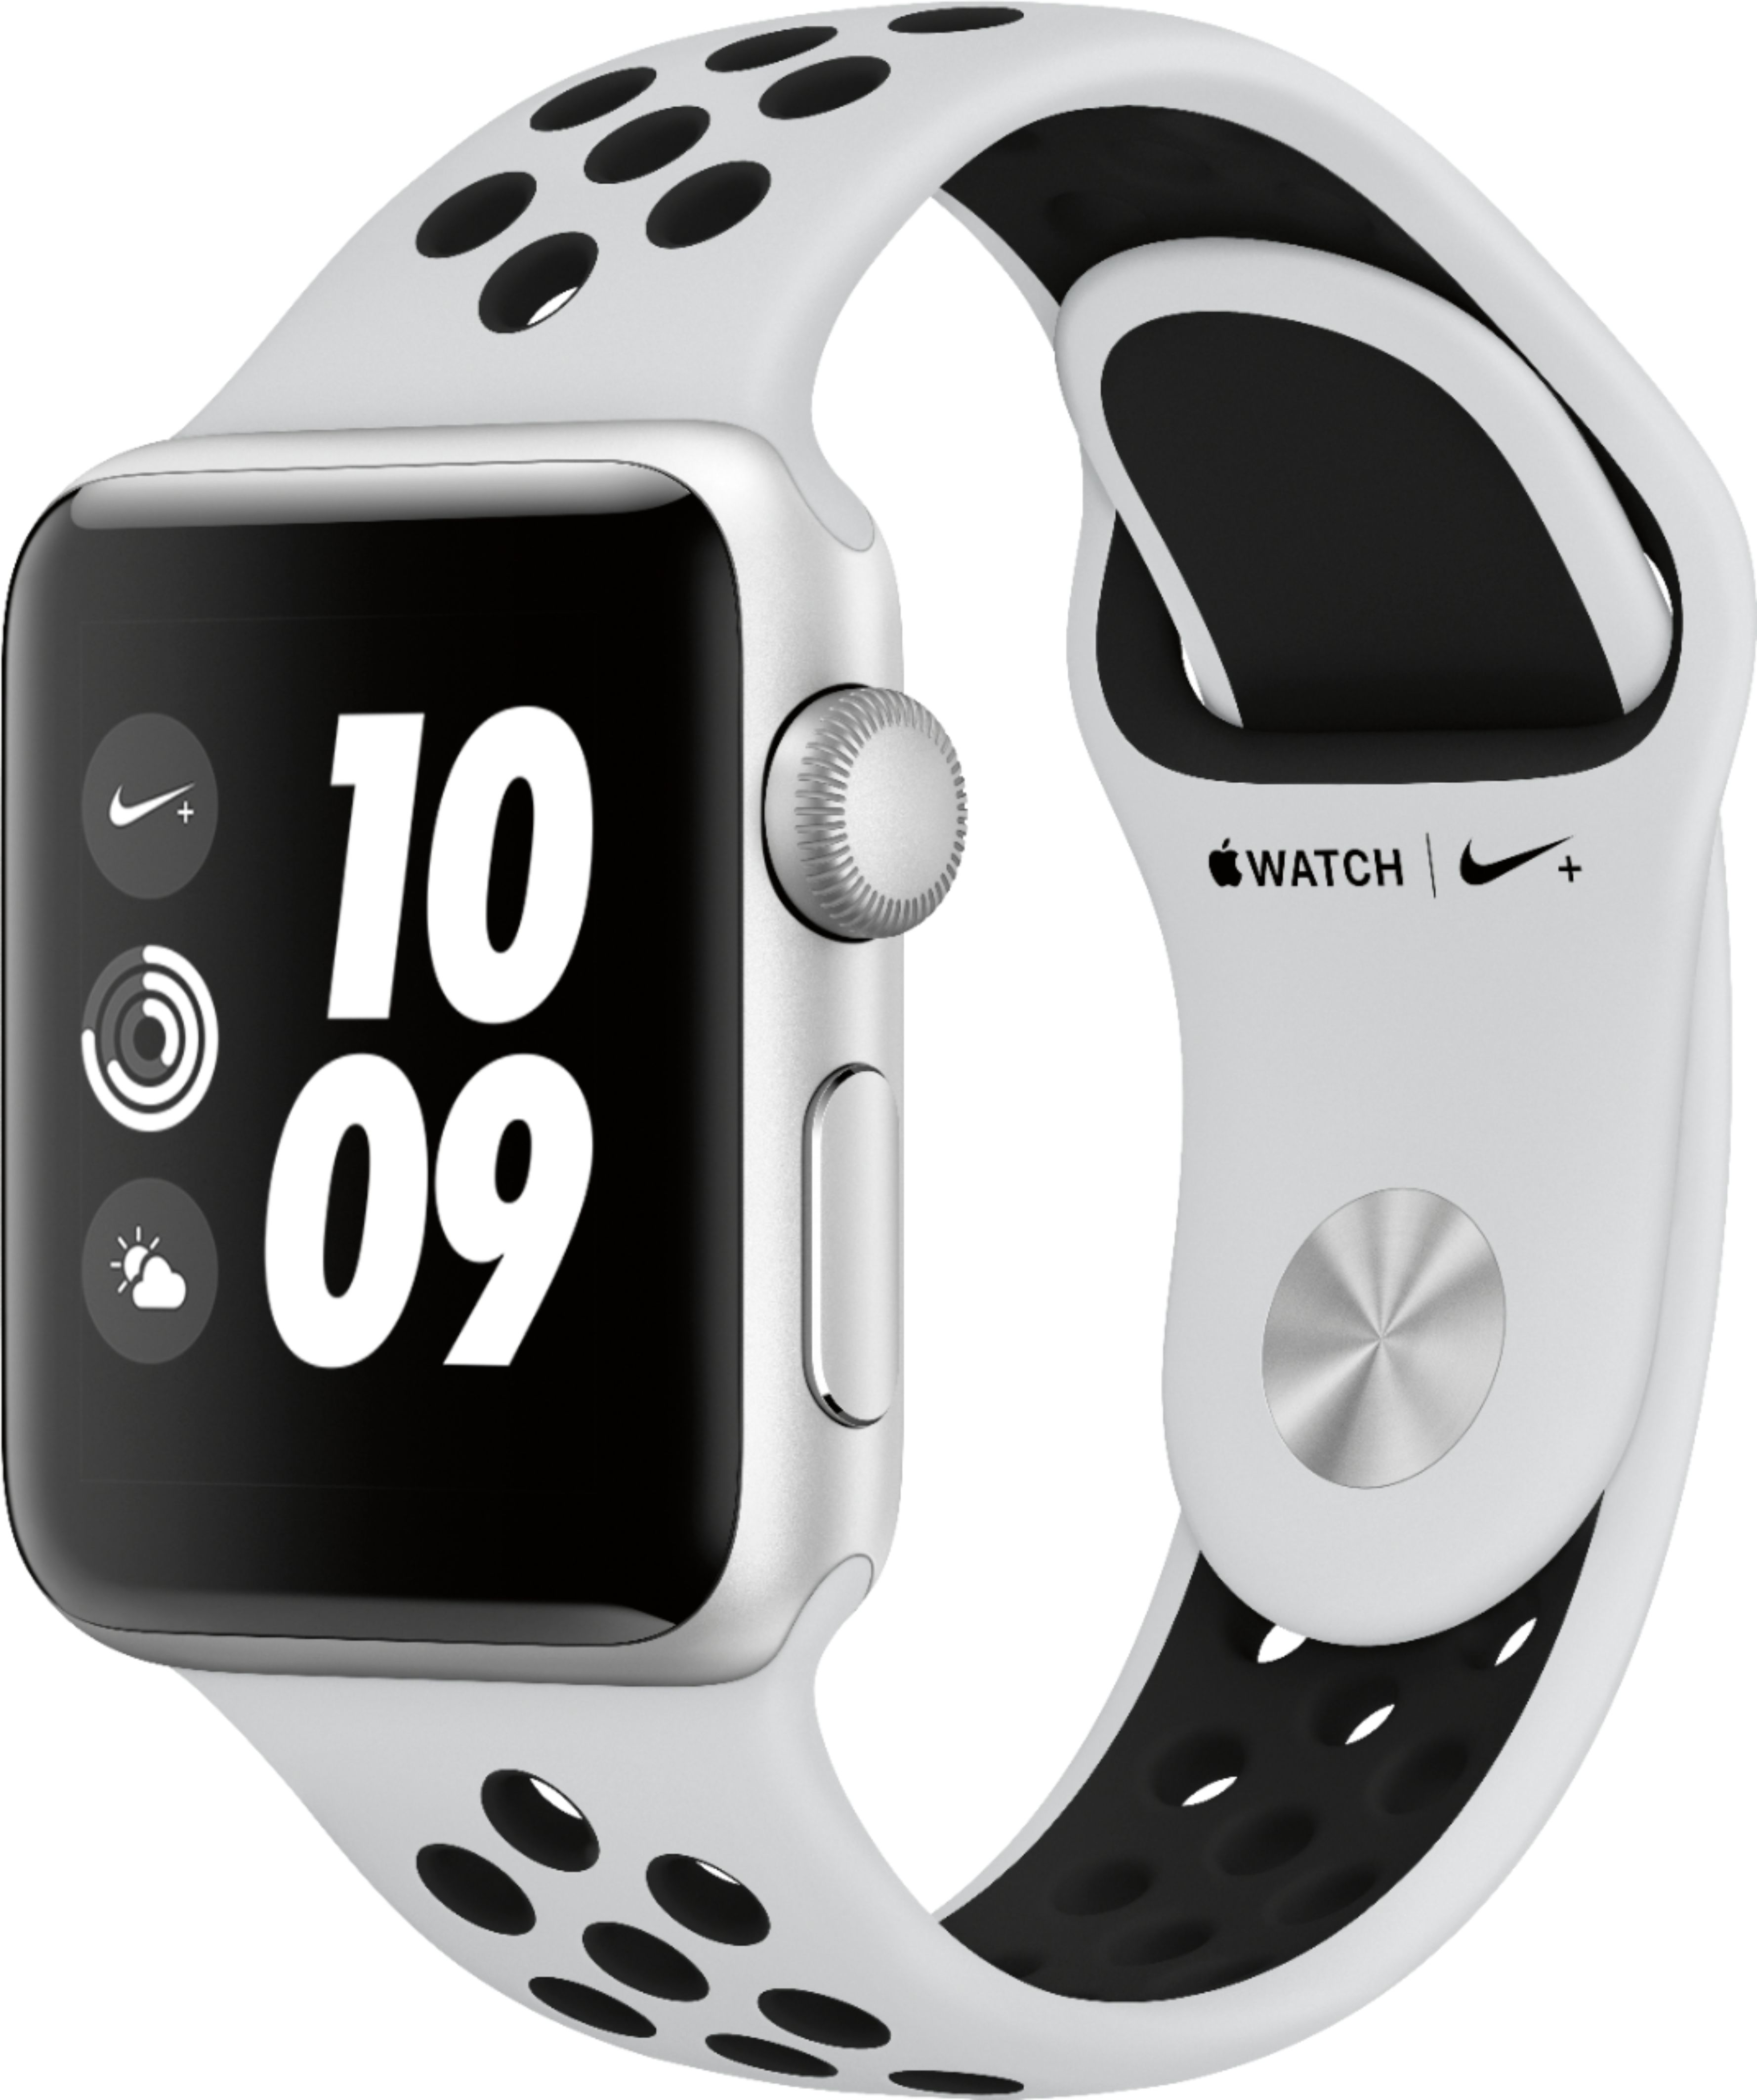 Apple Watch Nike+ Series 3 (GPS), 38mm Silver - Best Buy